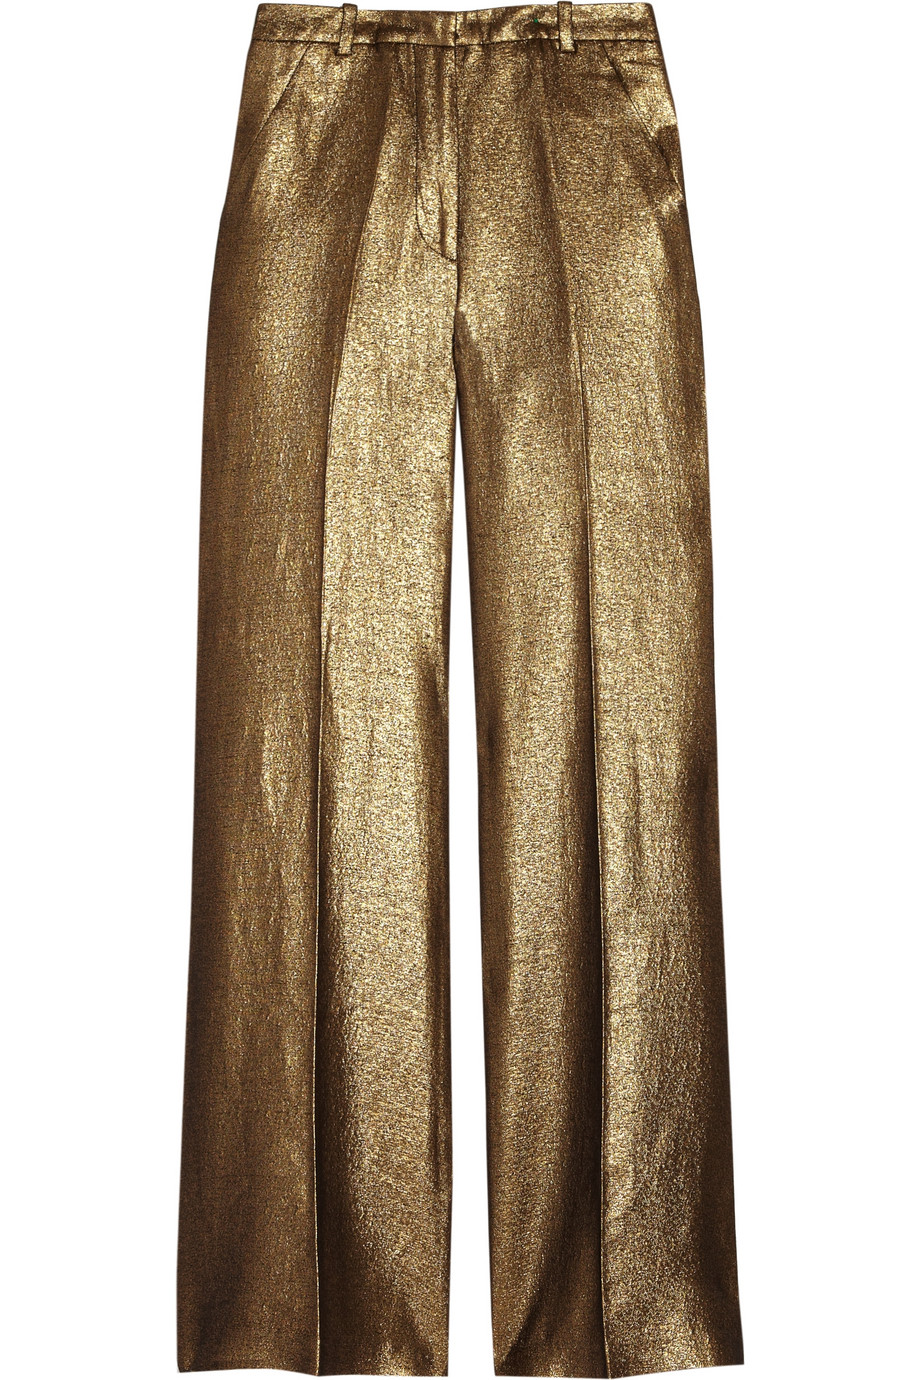 3.1 Phillip Lim Metallic Wide-leg Pants in Gold | Lyst